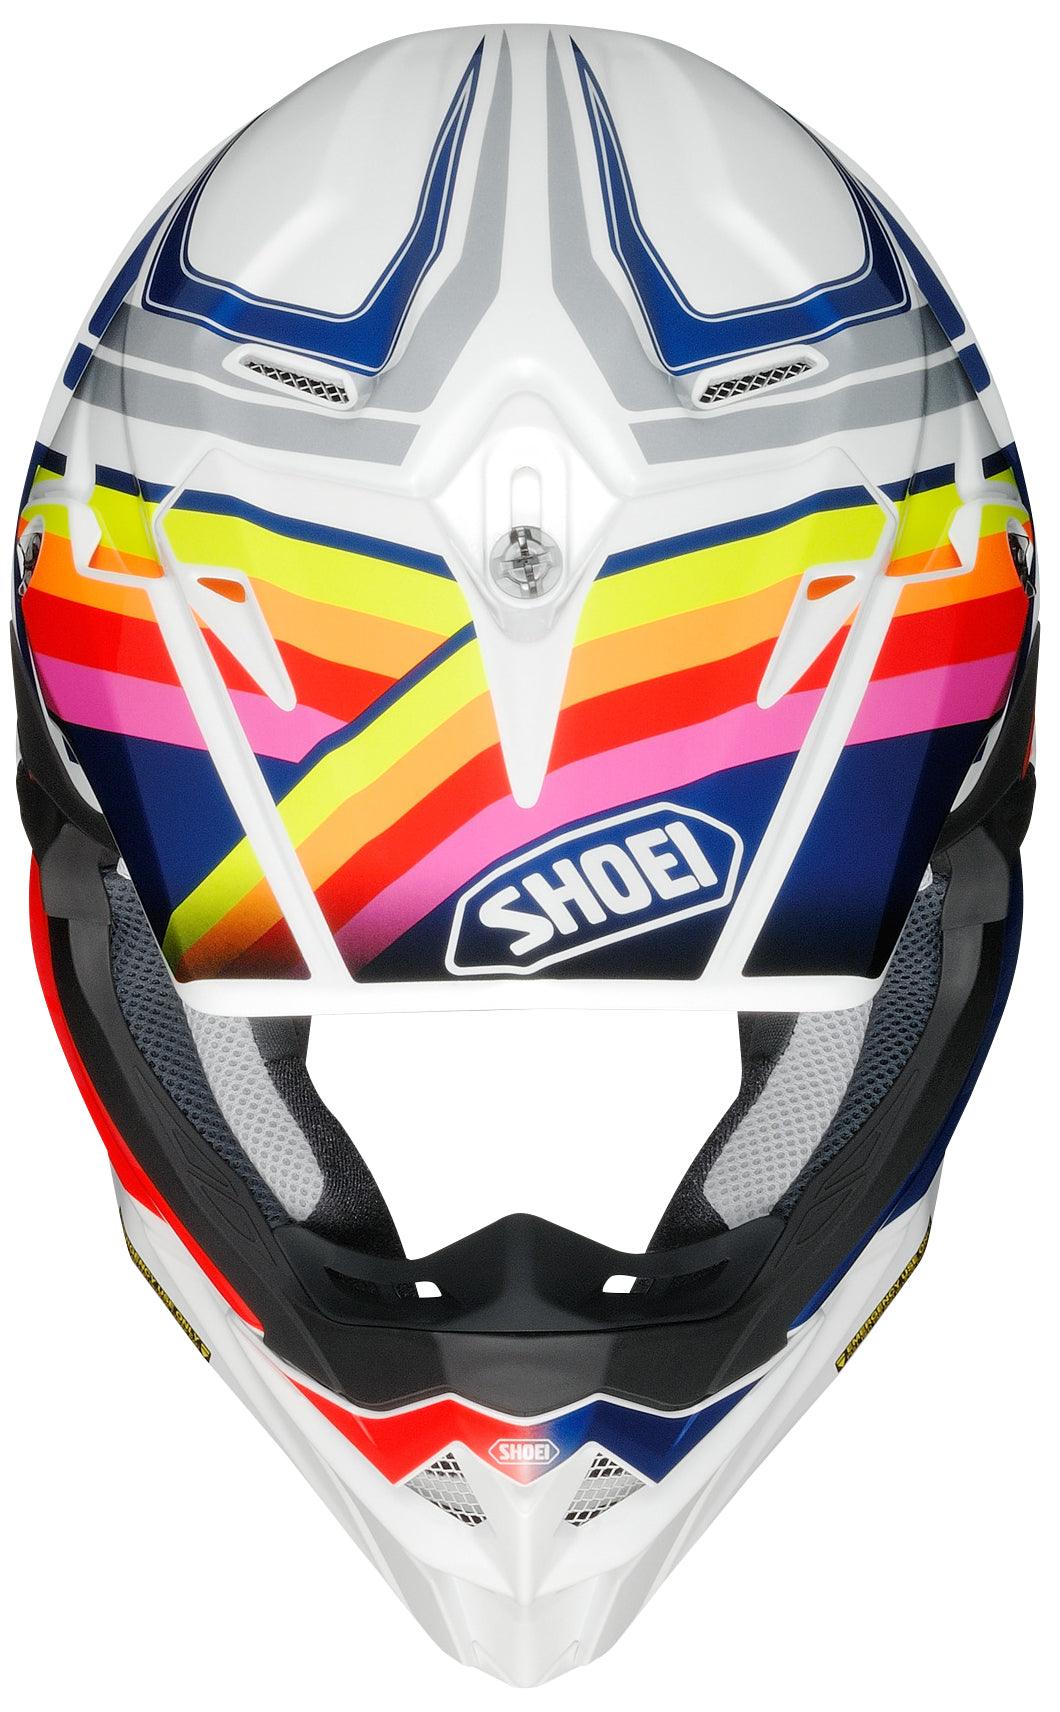 Shoei VFX-EVO Pinnacle Helmets - TC-1 Red/Dark Blue/White